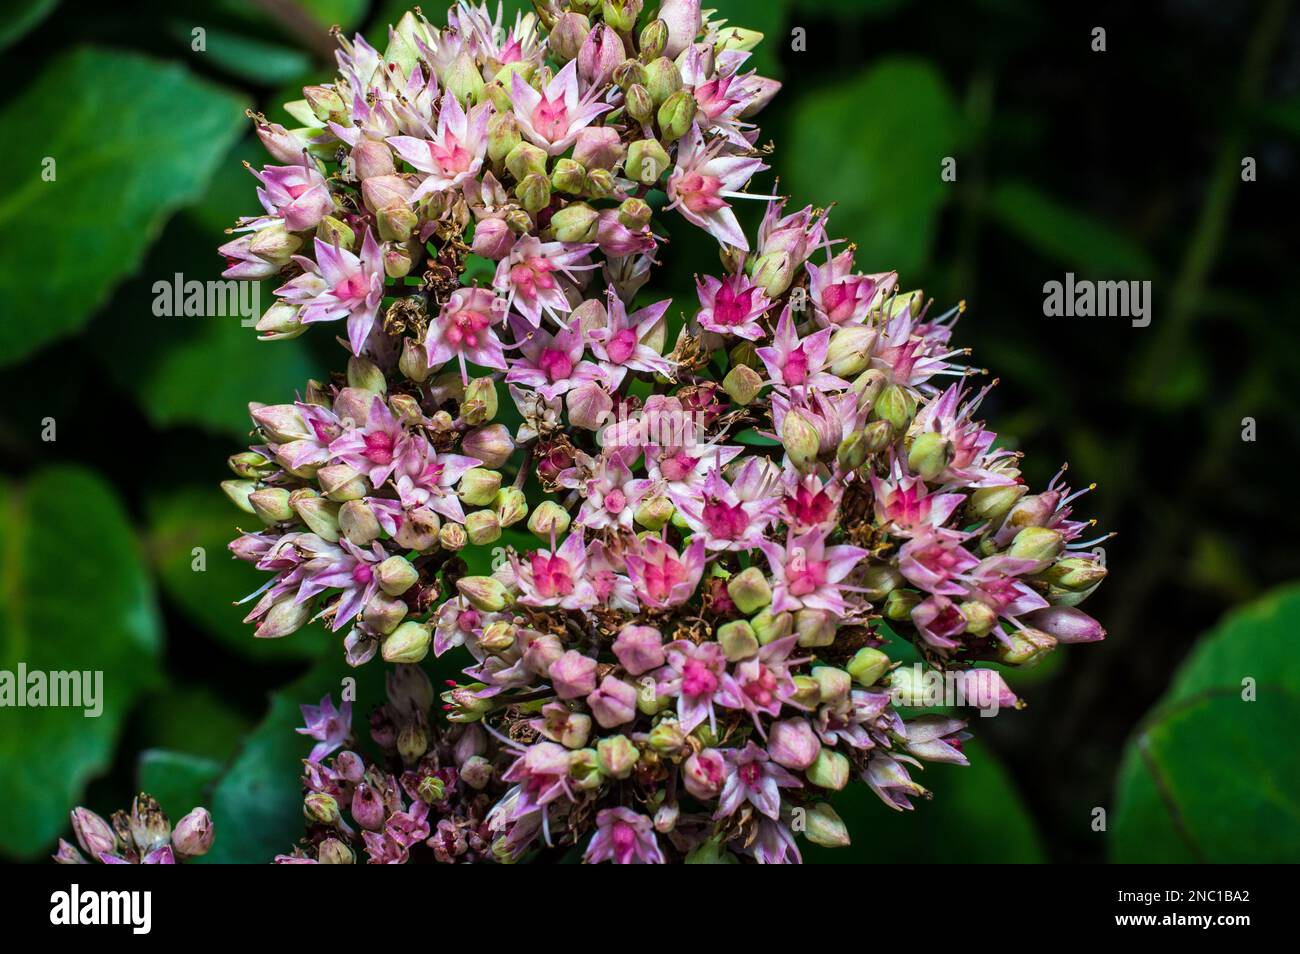 The Hylotelephium sedum spectabile autumn purple flowering ornamental plant, stonecrop flowers in bloom Stock Photo